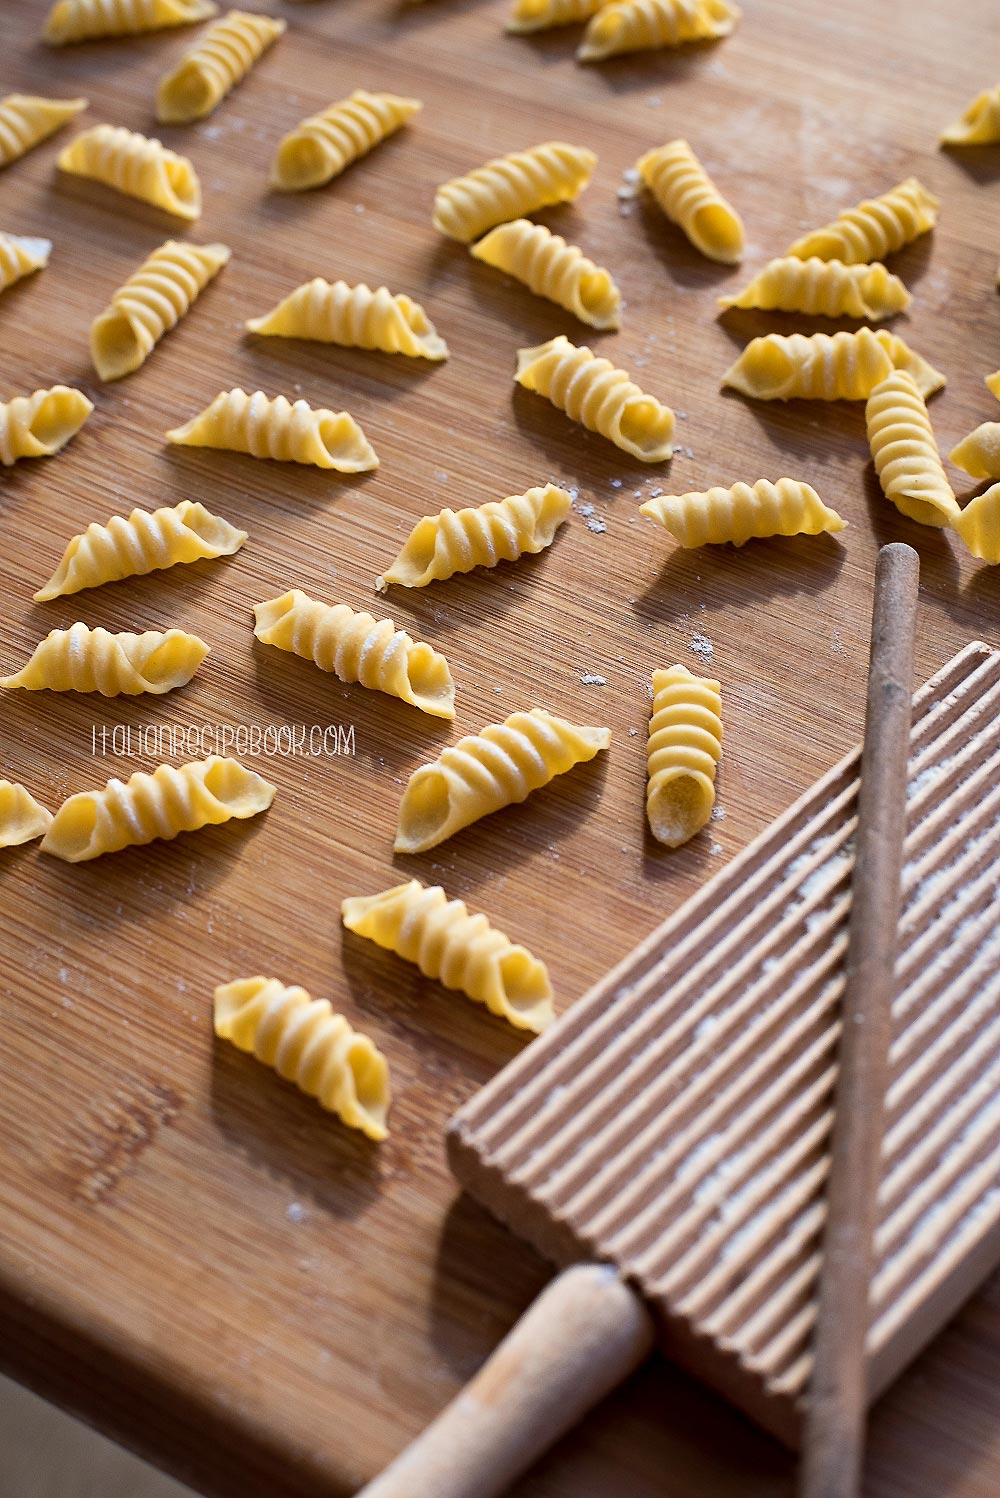 garganelli pasta on a wooden board